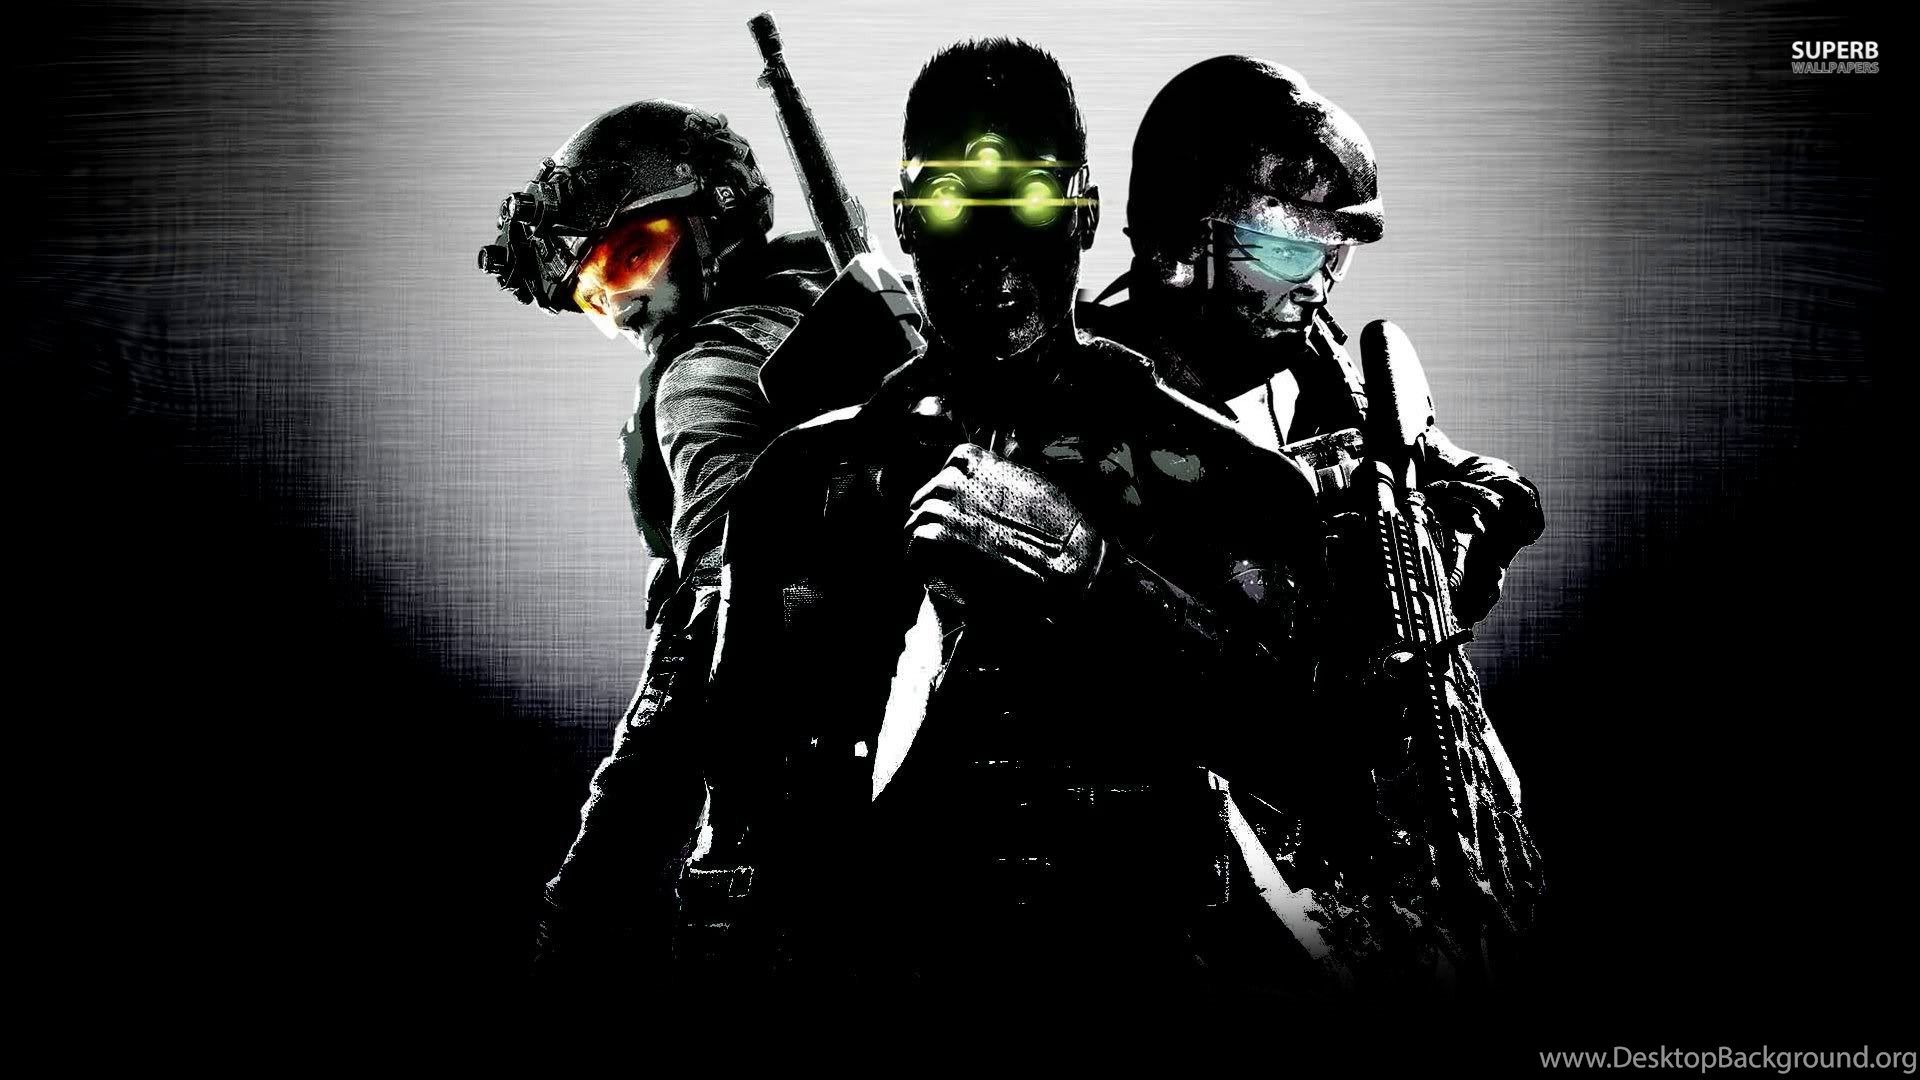 Tom Clancy's Splinter Cell: Blacklist Wallpaper Game Wallpaper. Desktop Background